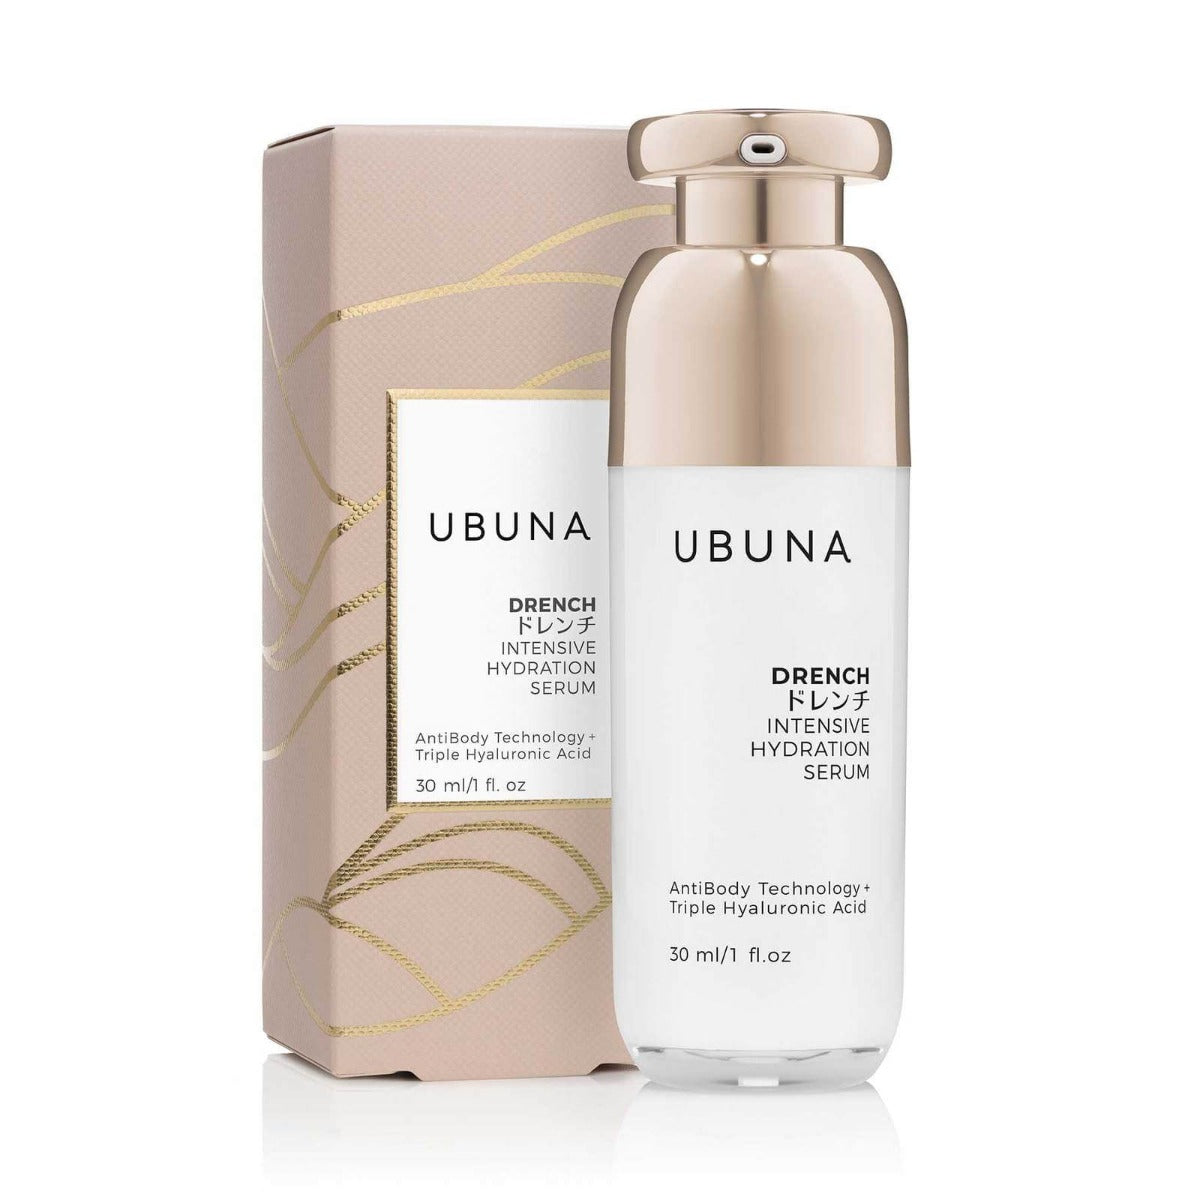 Ubuna Drench Intensive Hydration Serum - 30ml